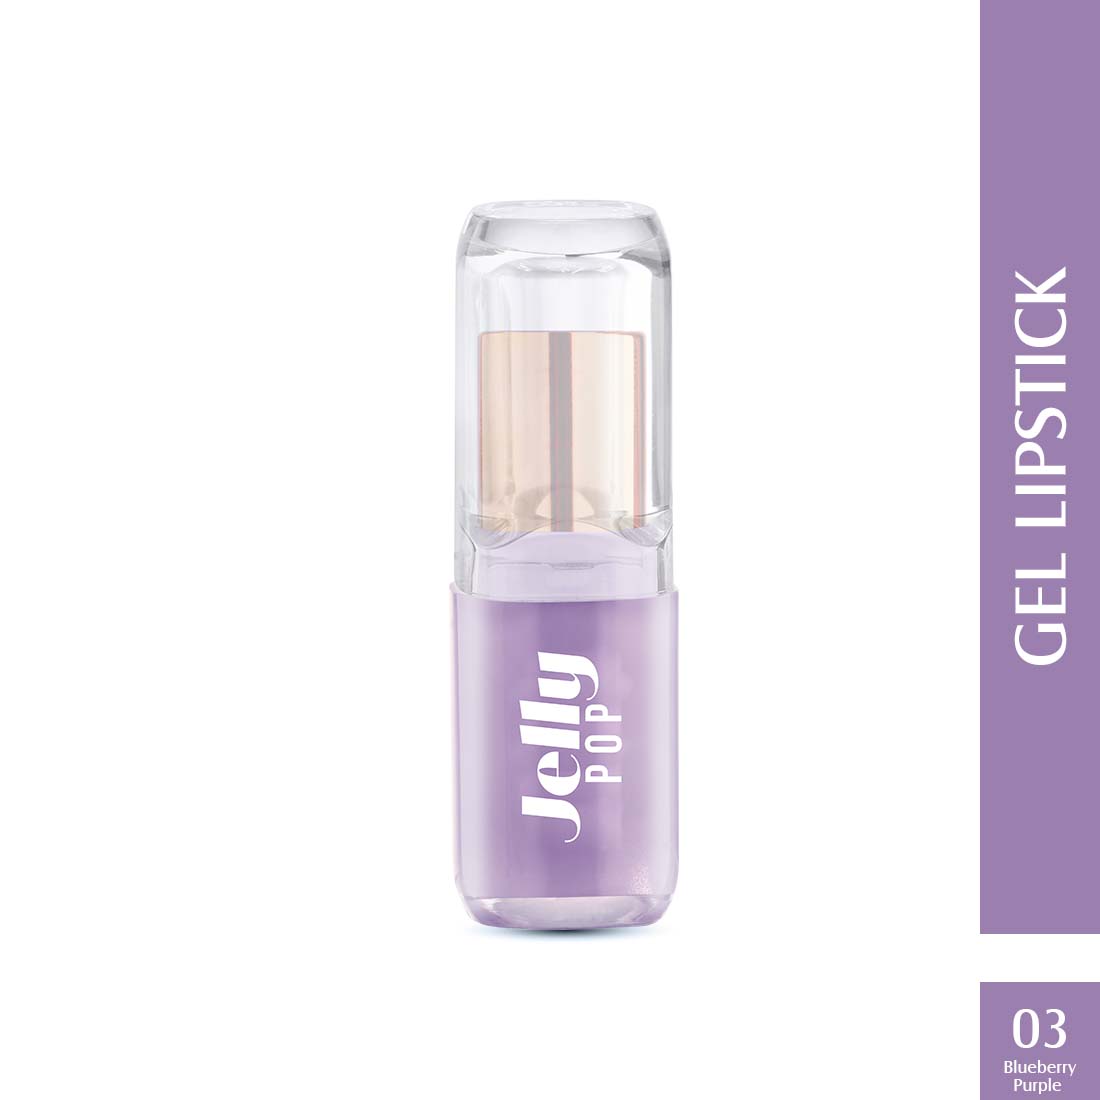 Glam21 Jelly Pop Color Change Fruity Gel Lipstick Soft Lips | Waterproof Glossy Finish, 3.5g (Blueberry Purple)